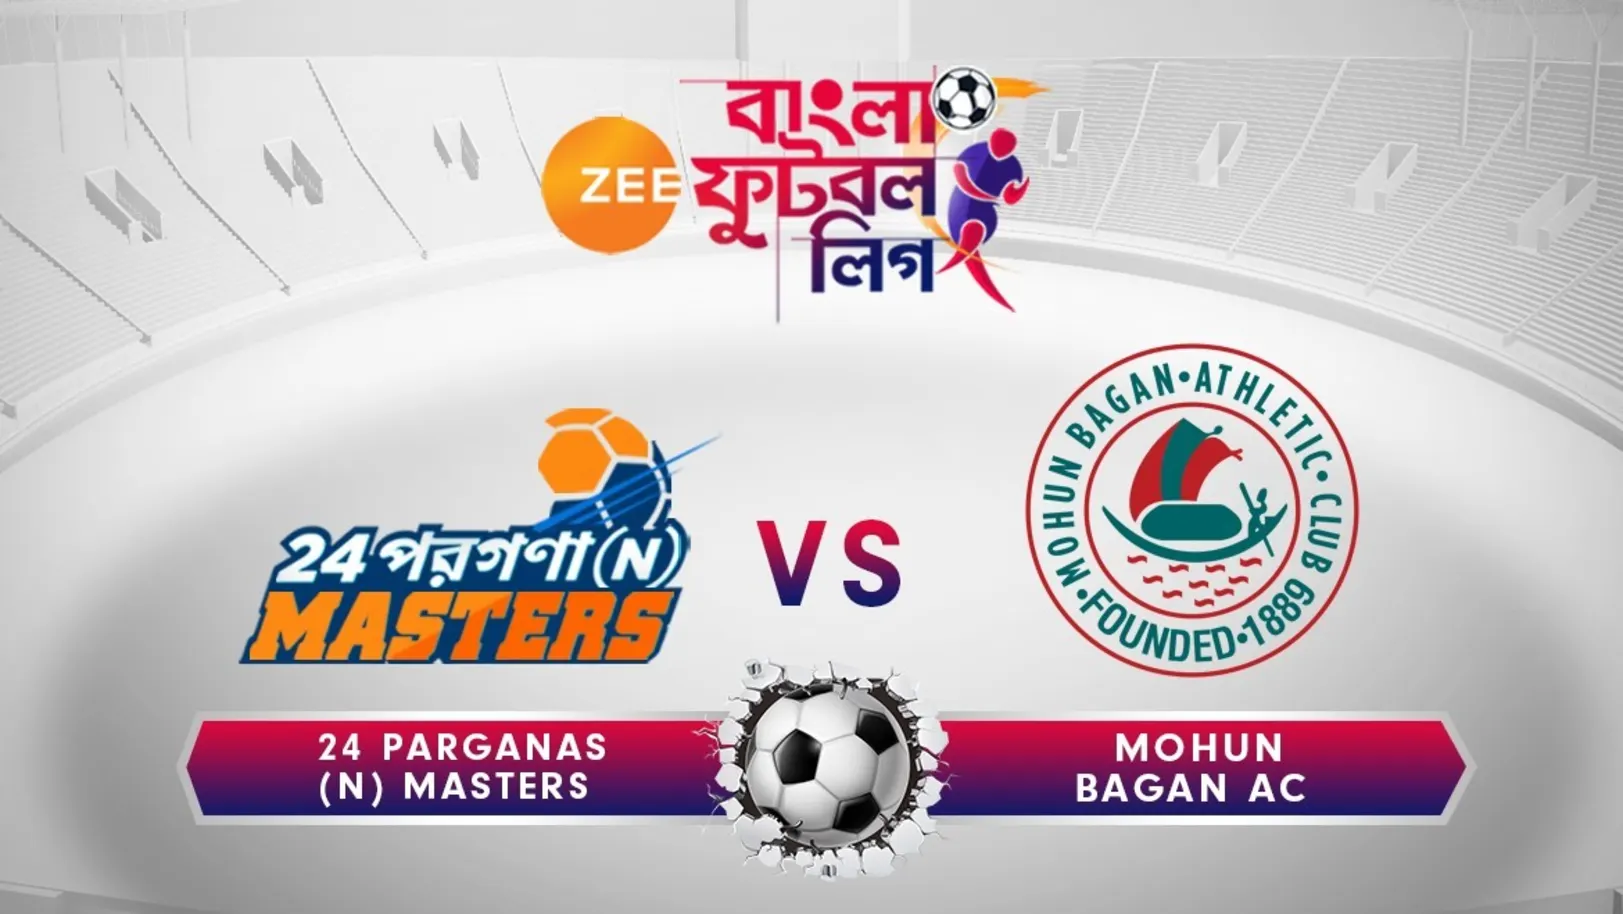 ADBD Dakshin 24 Pargana vs Mohun Bagan AC - June 21 - ZBFL 2019 Episode 42